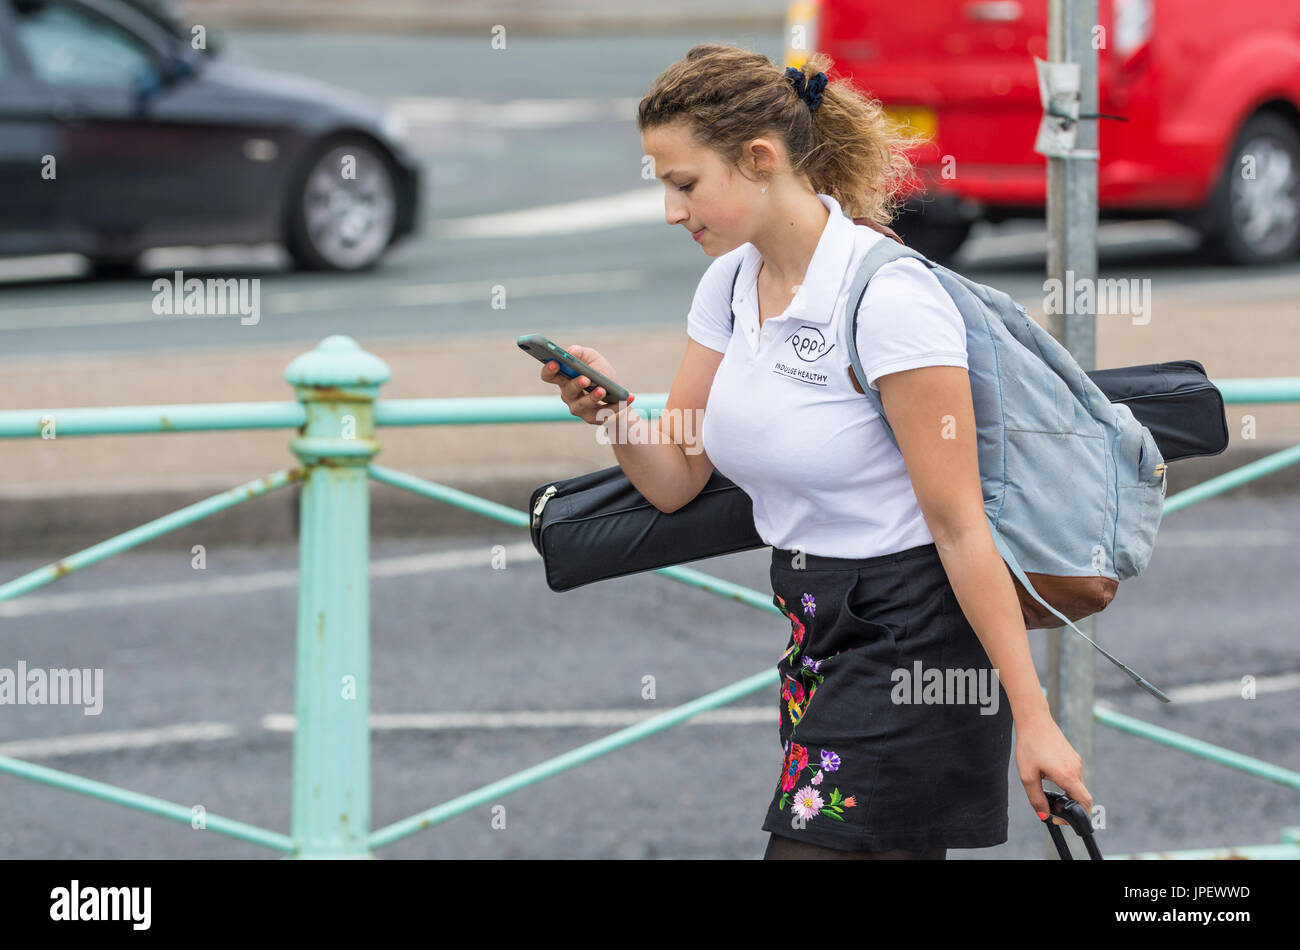 Junge Frau wandern entlang am Handy suchen. Online Kultur. Das moderne Leben Konzept. Immer verbunden. Stockfoto